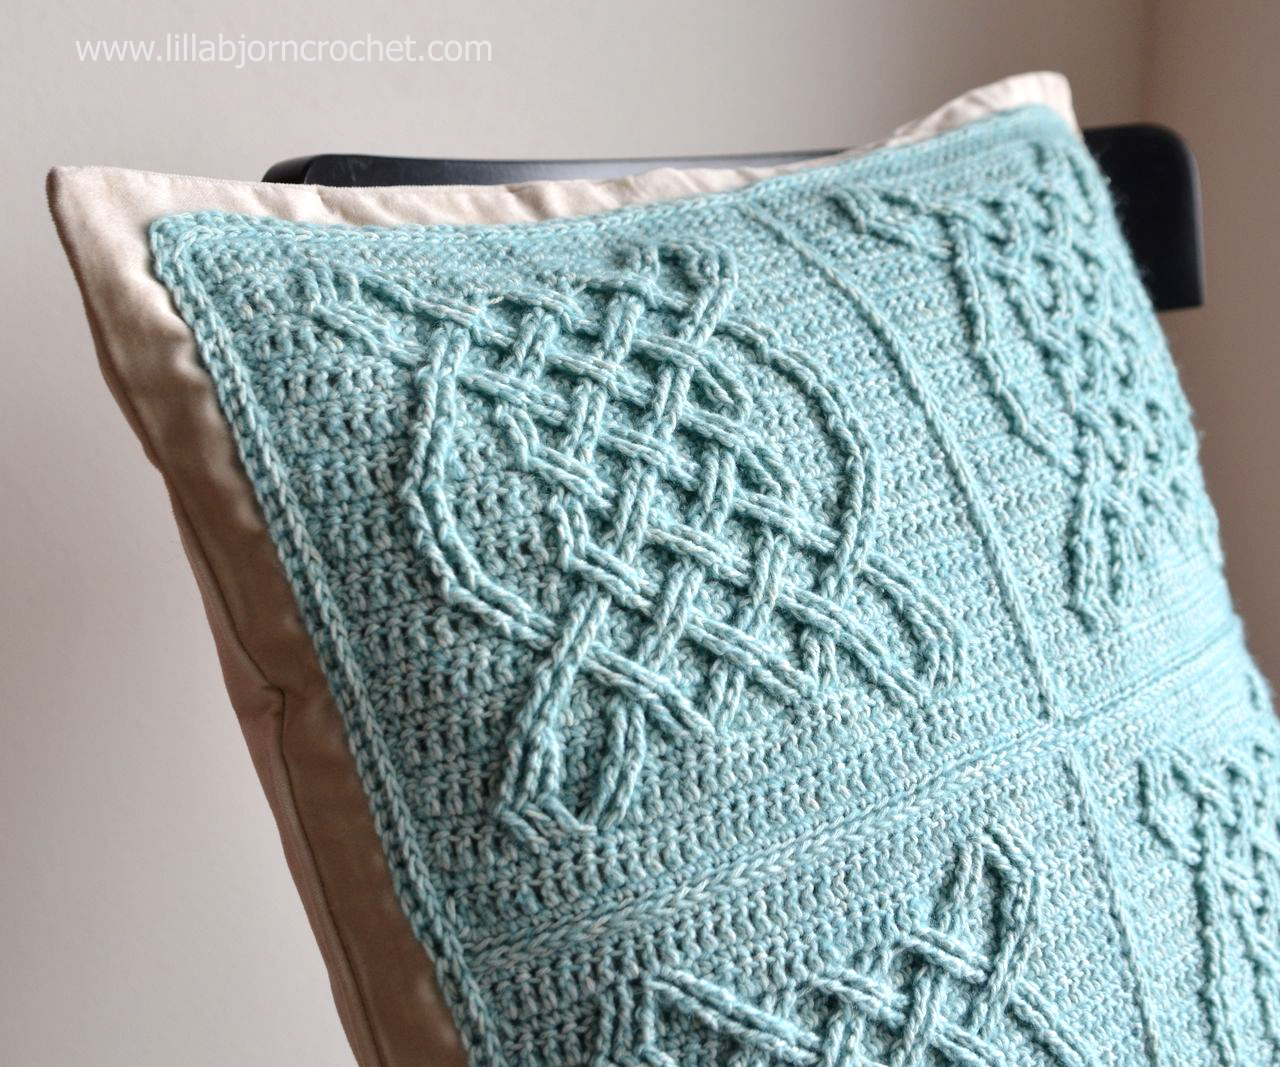 Celtic Tiles pillow - FREE overlay crochet pattern by Lilla Bjorn